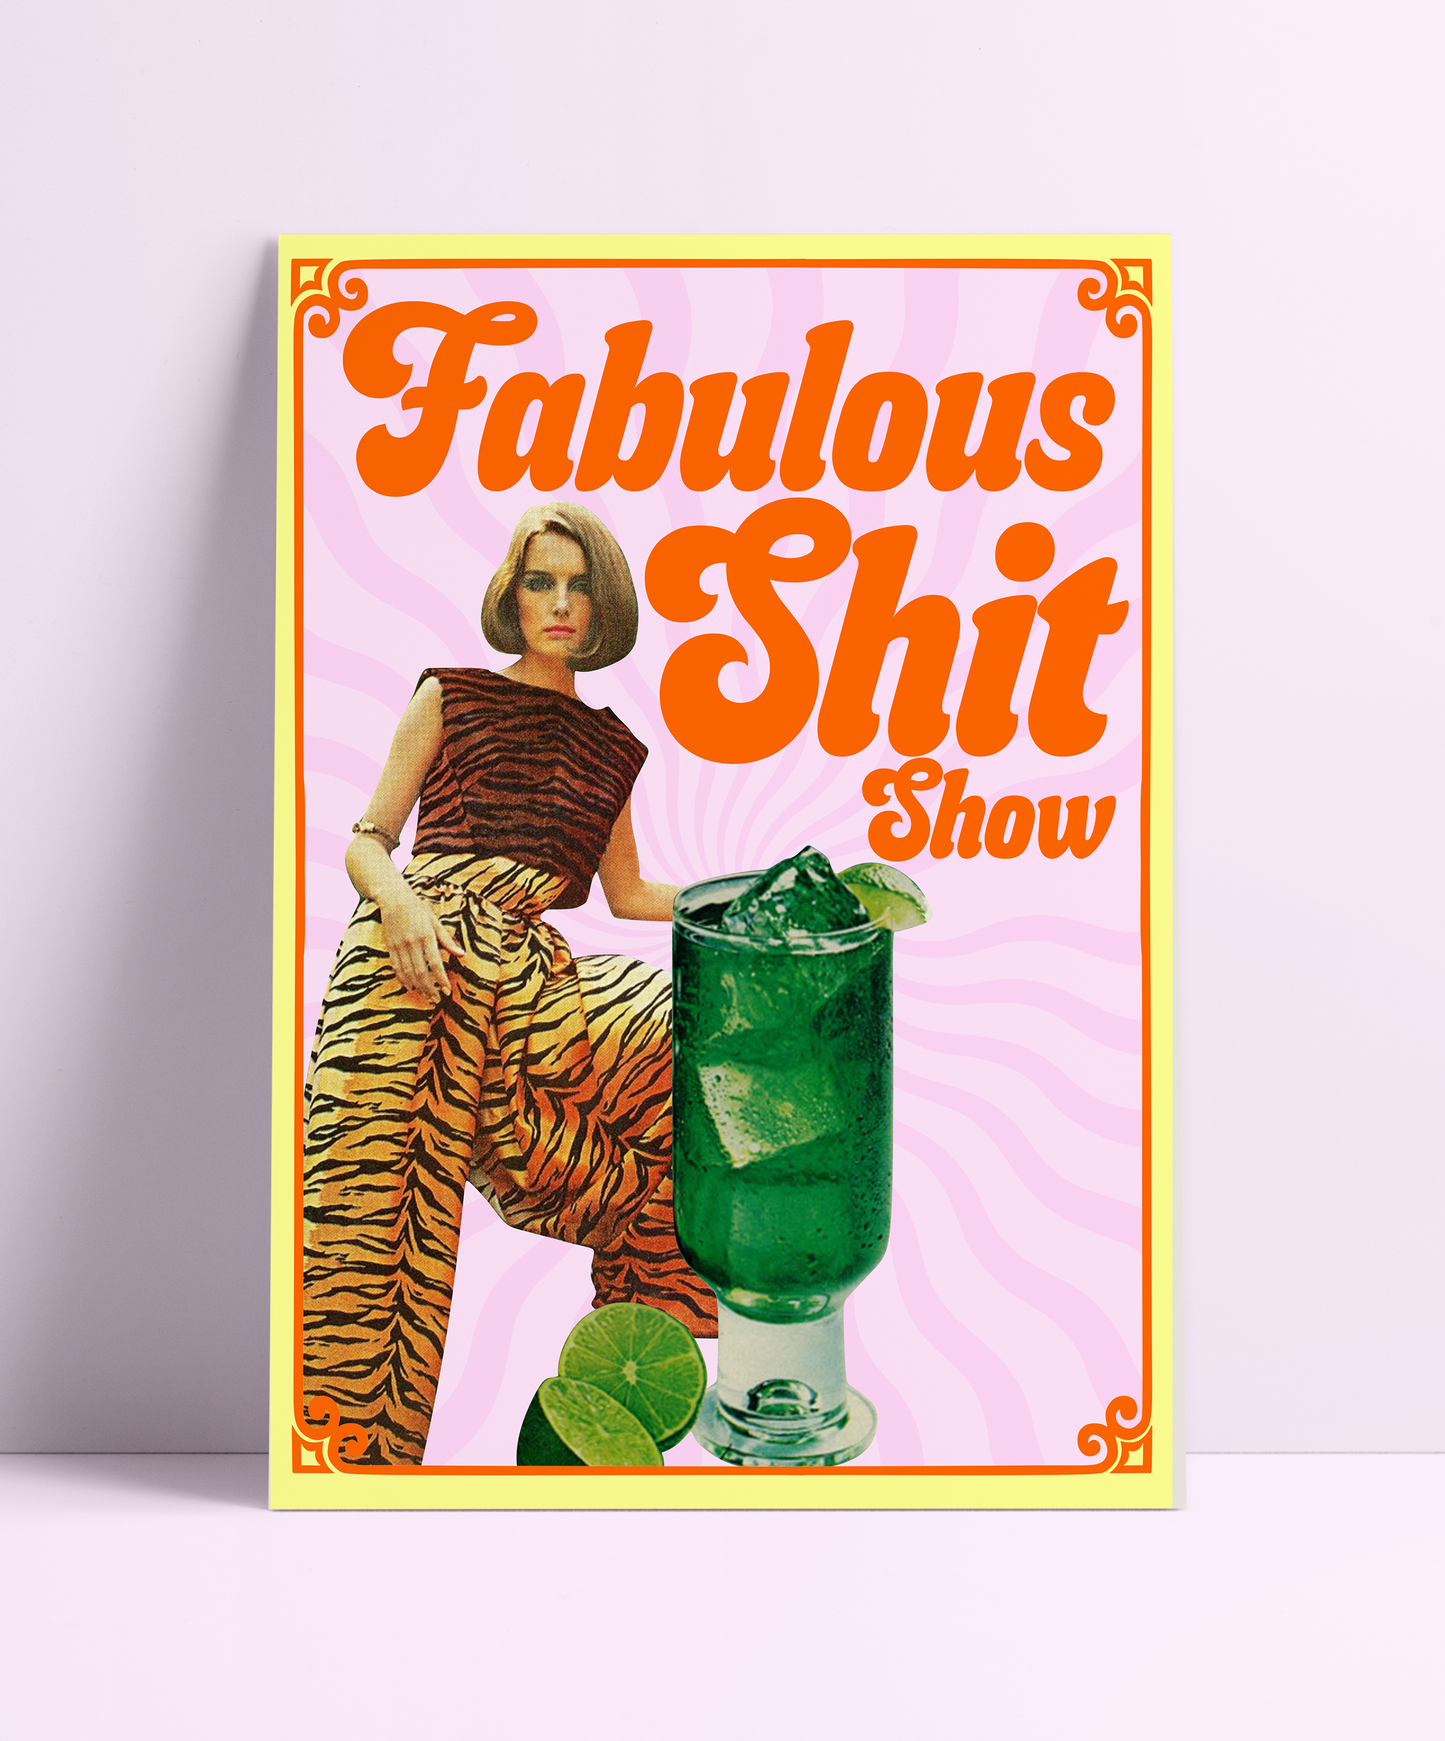 Fabulous Shit Show Collage Wall Print